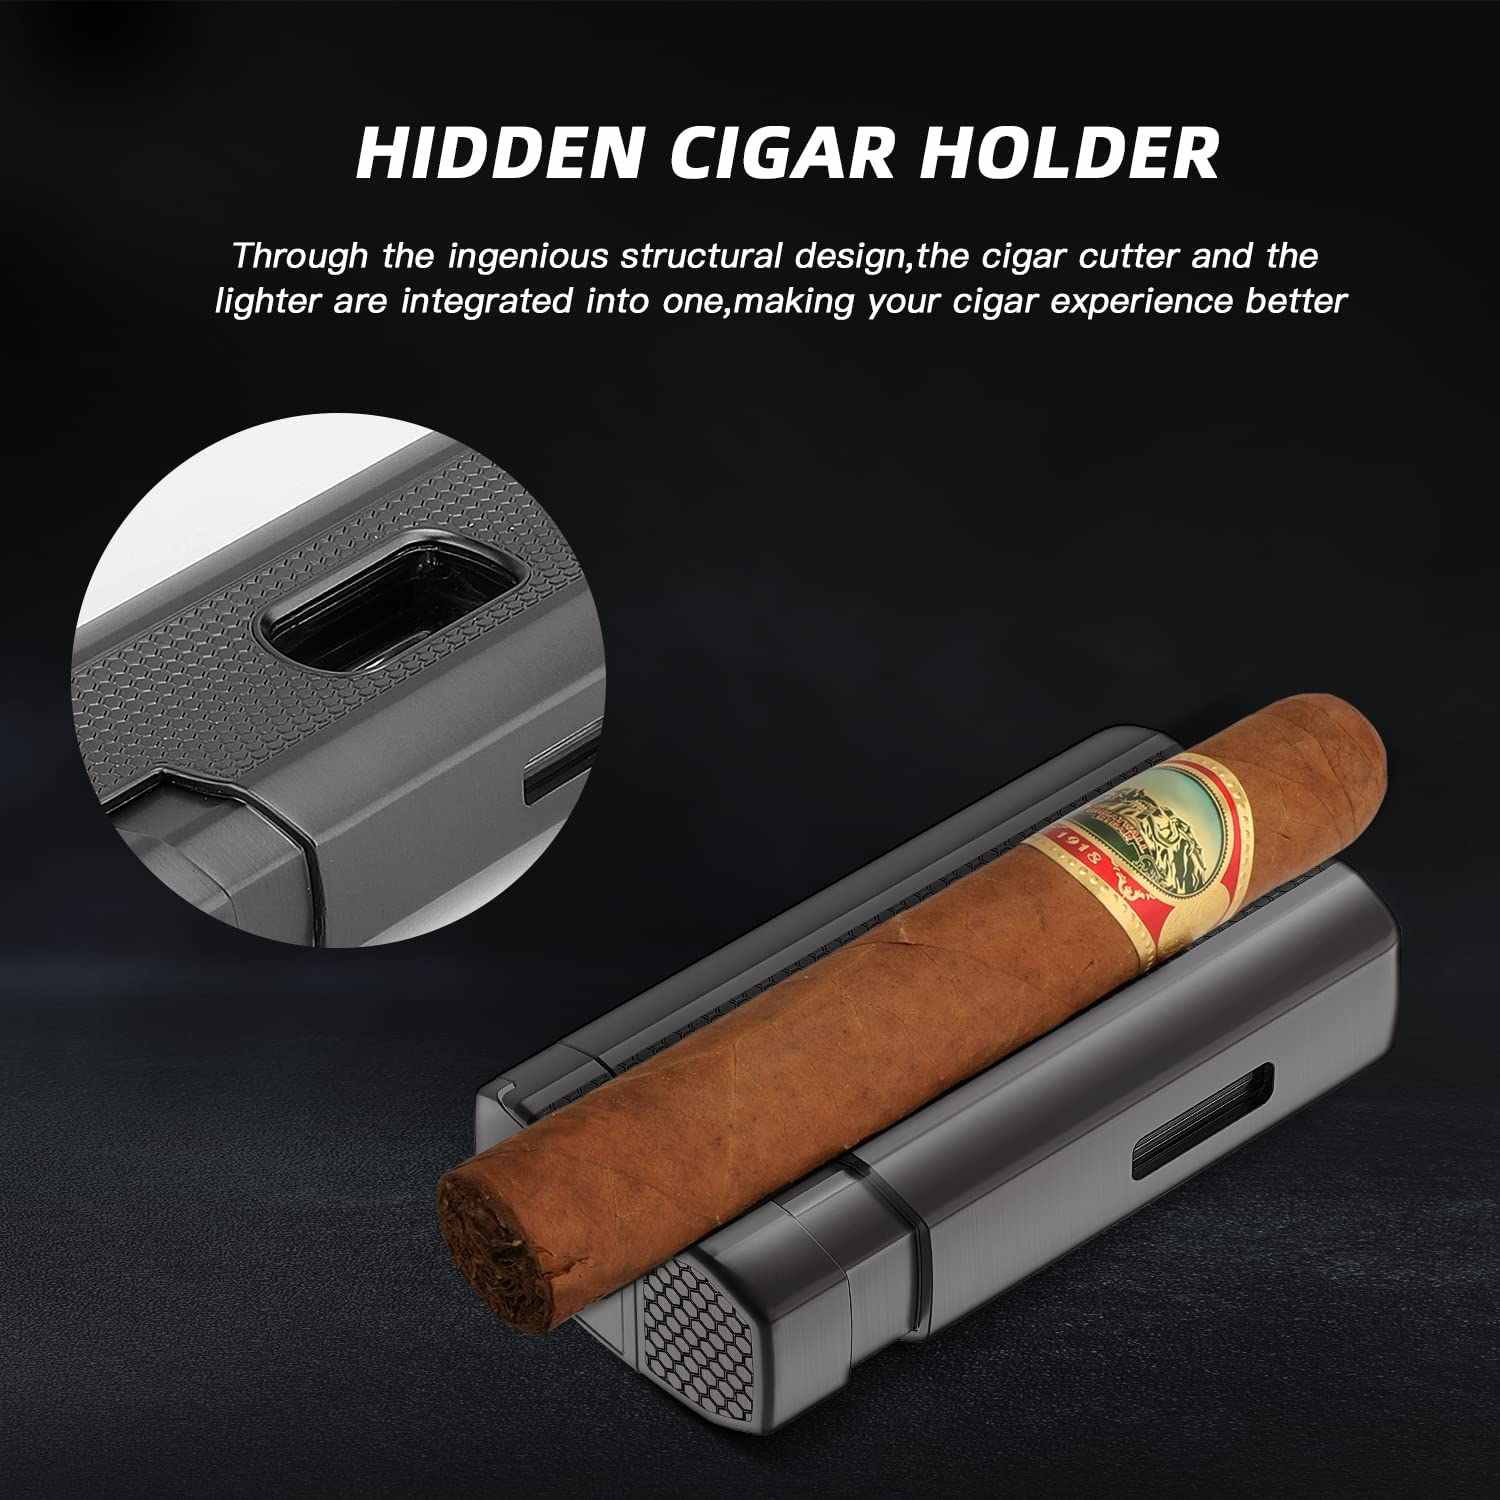 All In One Cigar Lighter